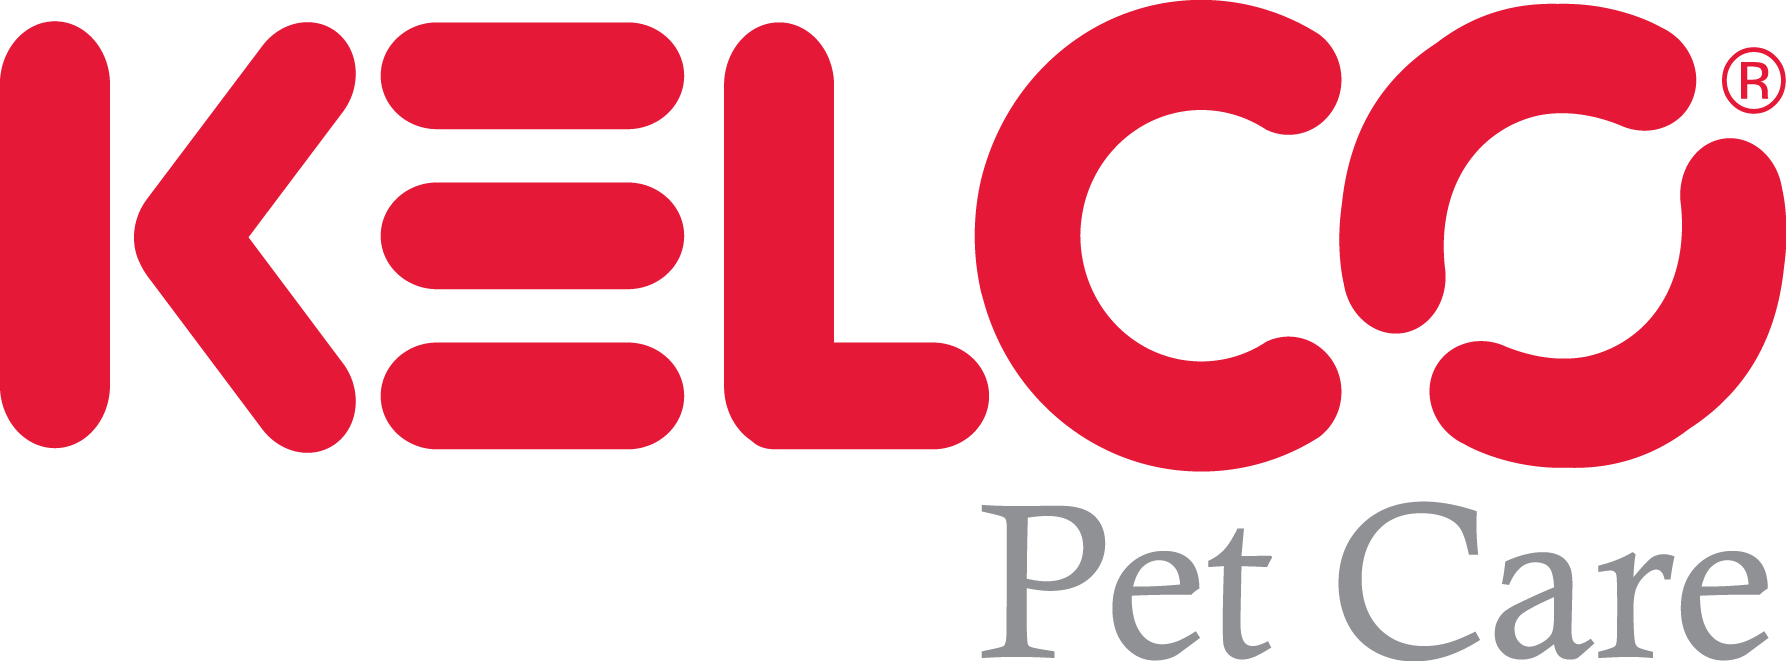 Logotipo Kelco pet care desenhado por GRUPO BUN [MDF].